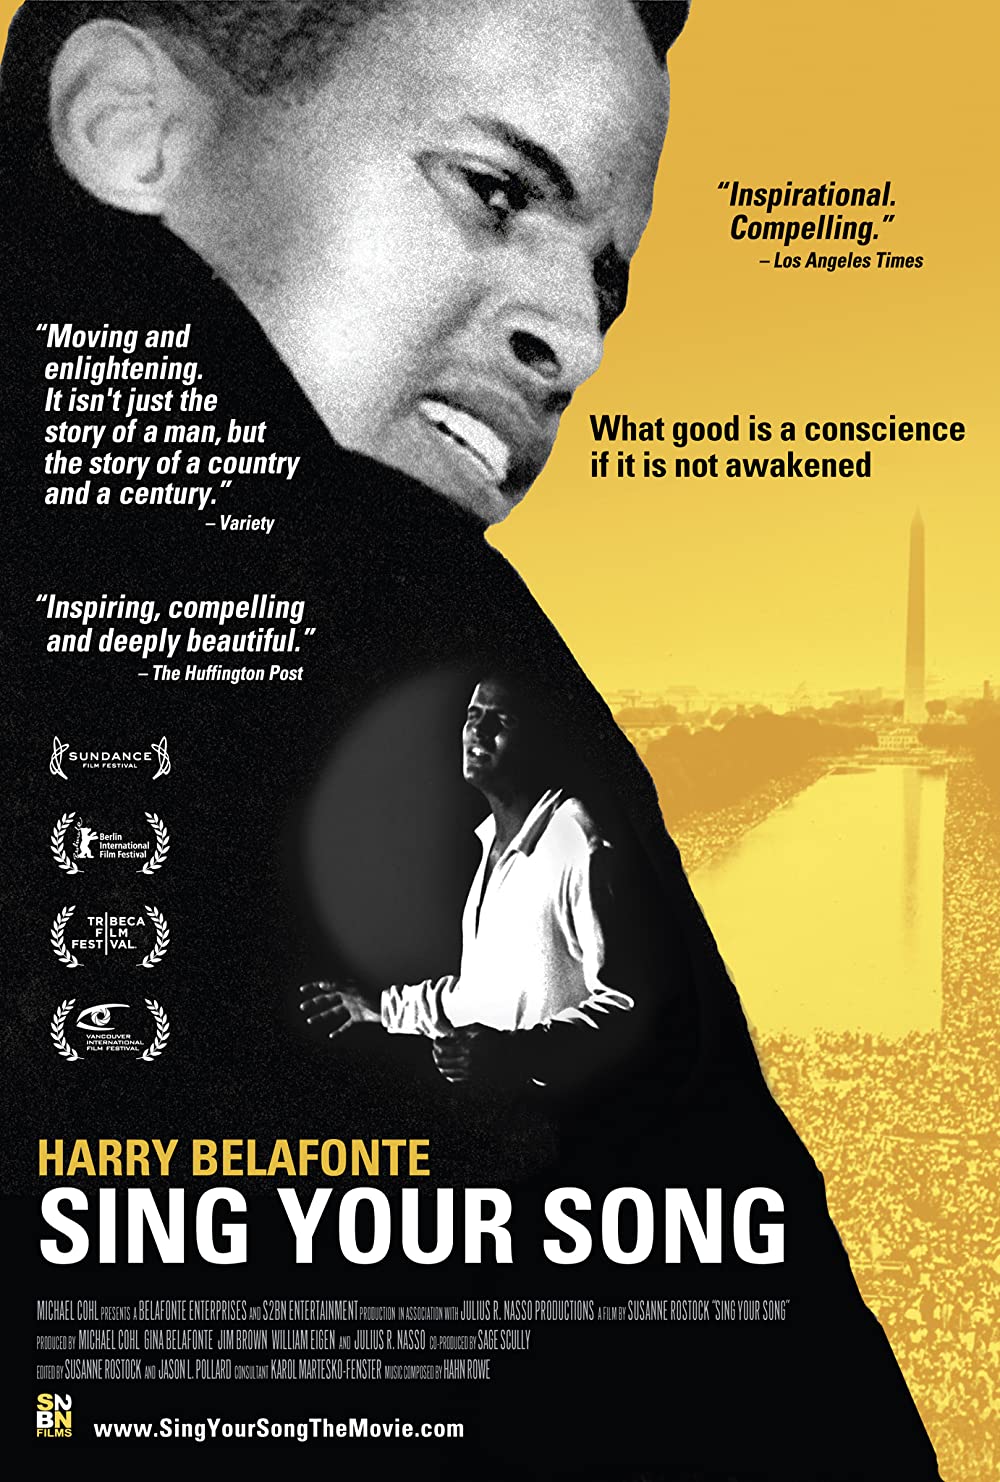 Filmbeschreibung zu Sing Your Song